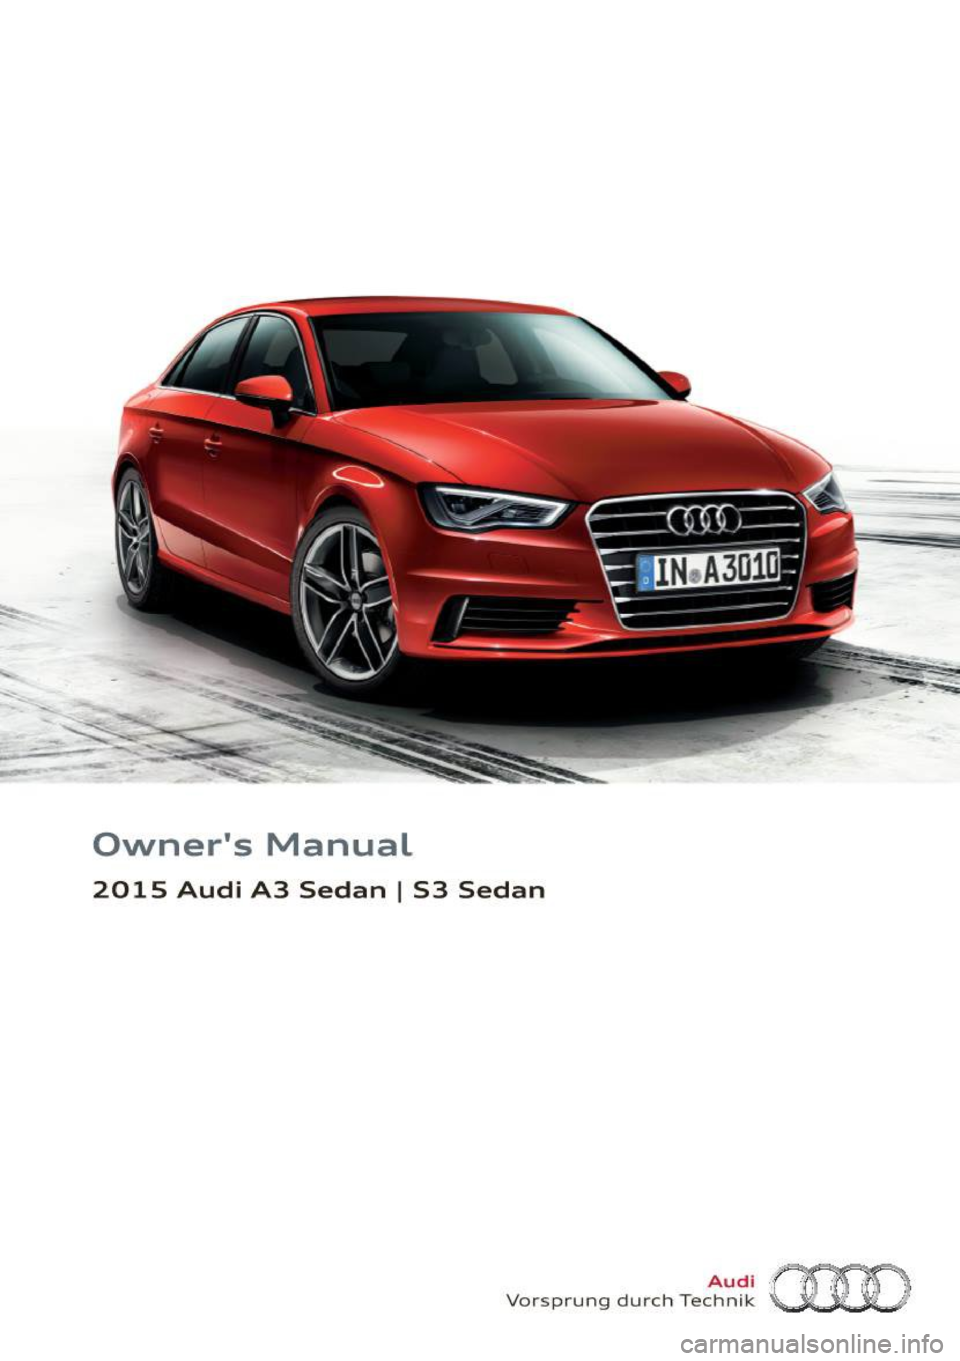 AUDI S3 SEDAN 2015  Owners Manual -
Owners  Manual 
2015  Audi  A3  Sedan I S3  Sedan 
Vors prung  durch  Tee~~?~ am  